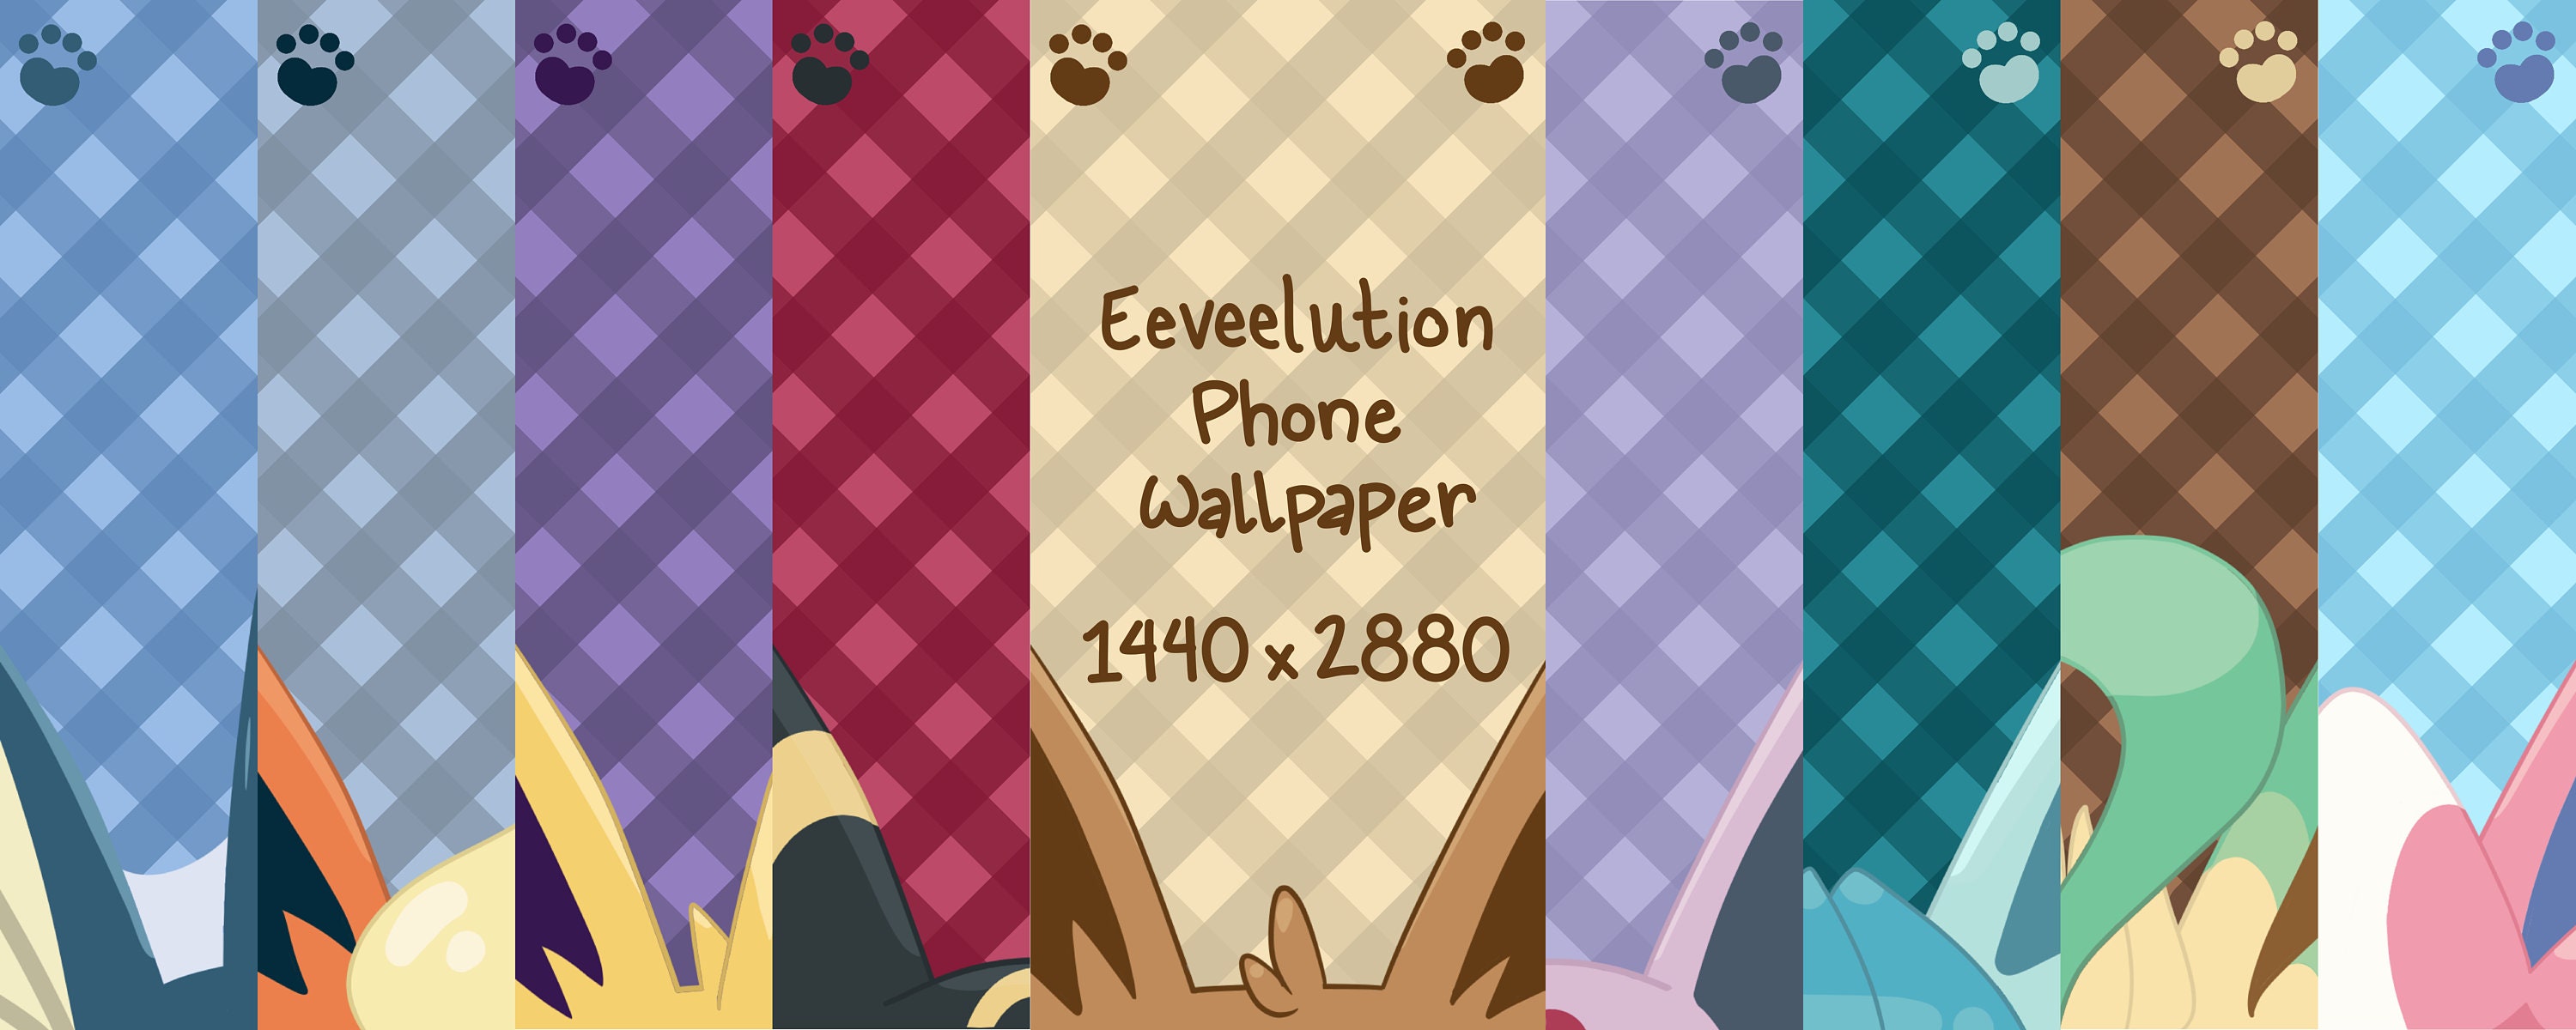 Credit Card SMART Sticker Skin Pokemonster:Eevee, Jolteon, Flareon